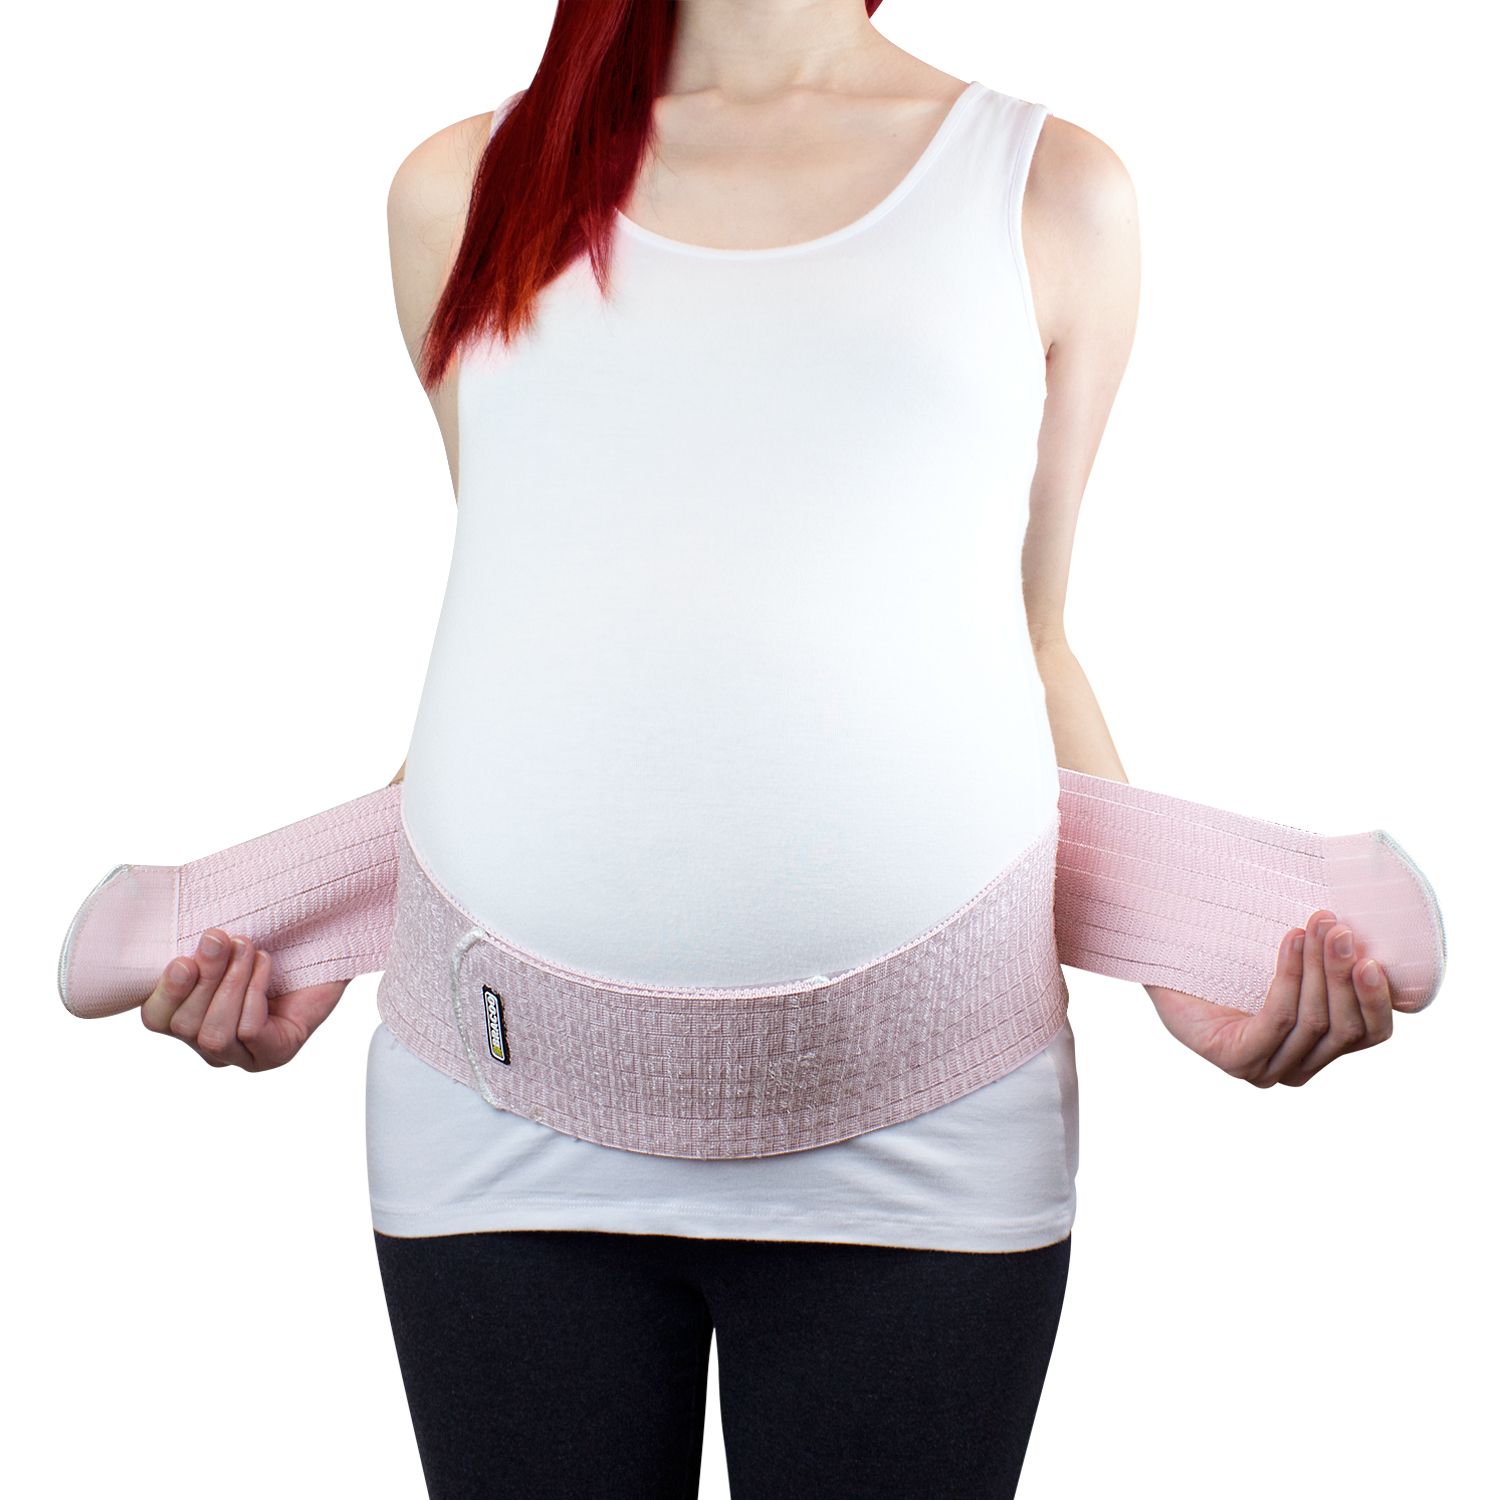 Bracoo Maternity Belt,Easy to Wear,Adjustable Support for Prenatal or Postpartum Comfort, Pink | Walmart (US)